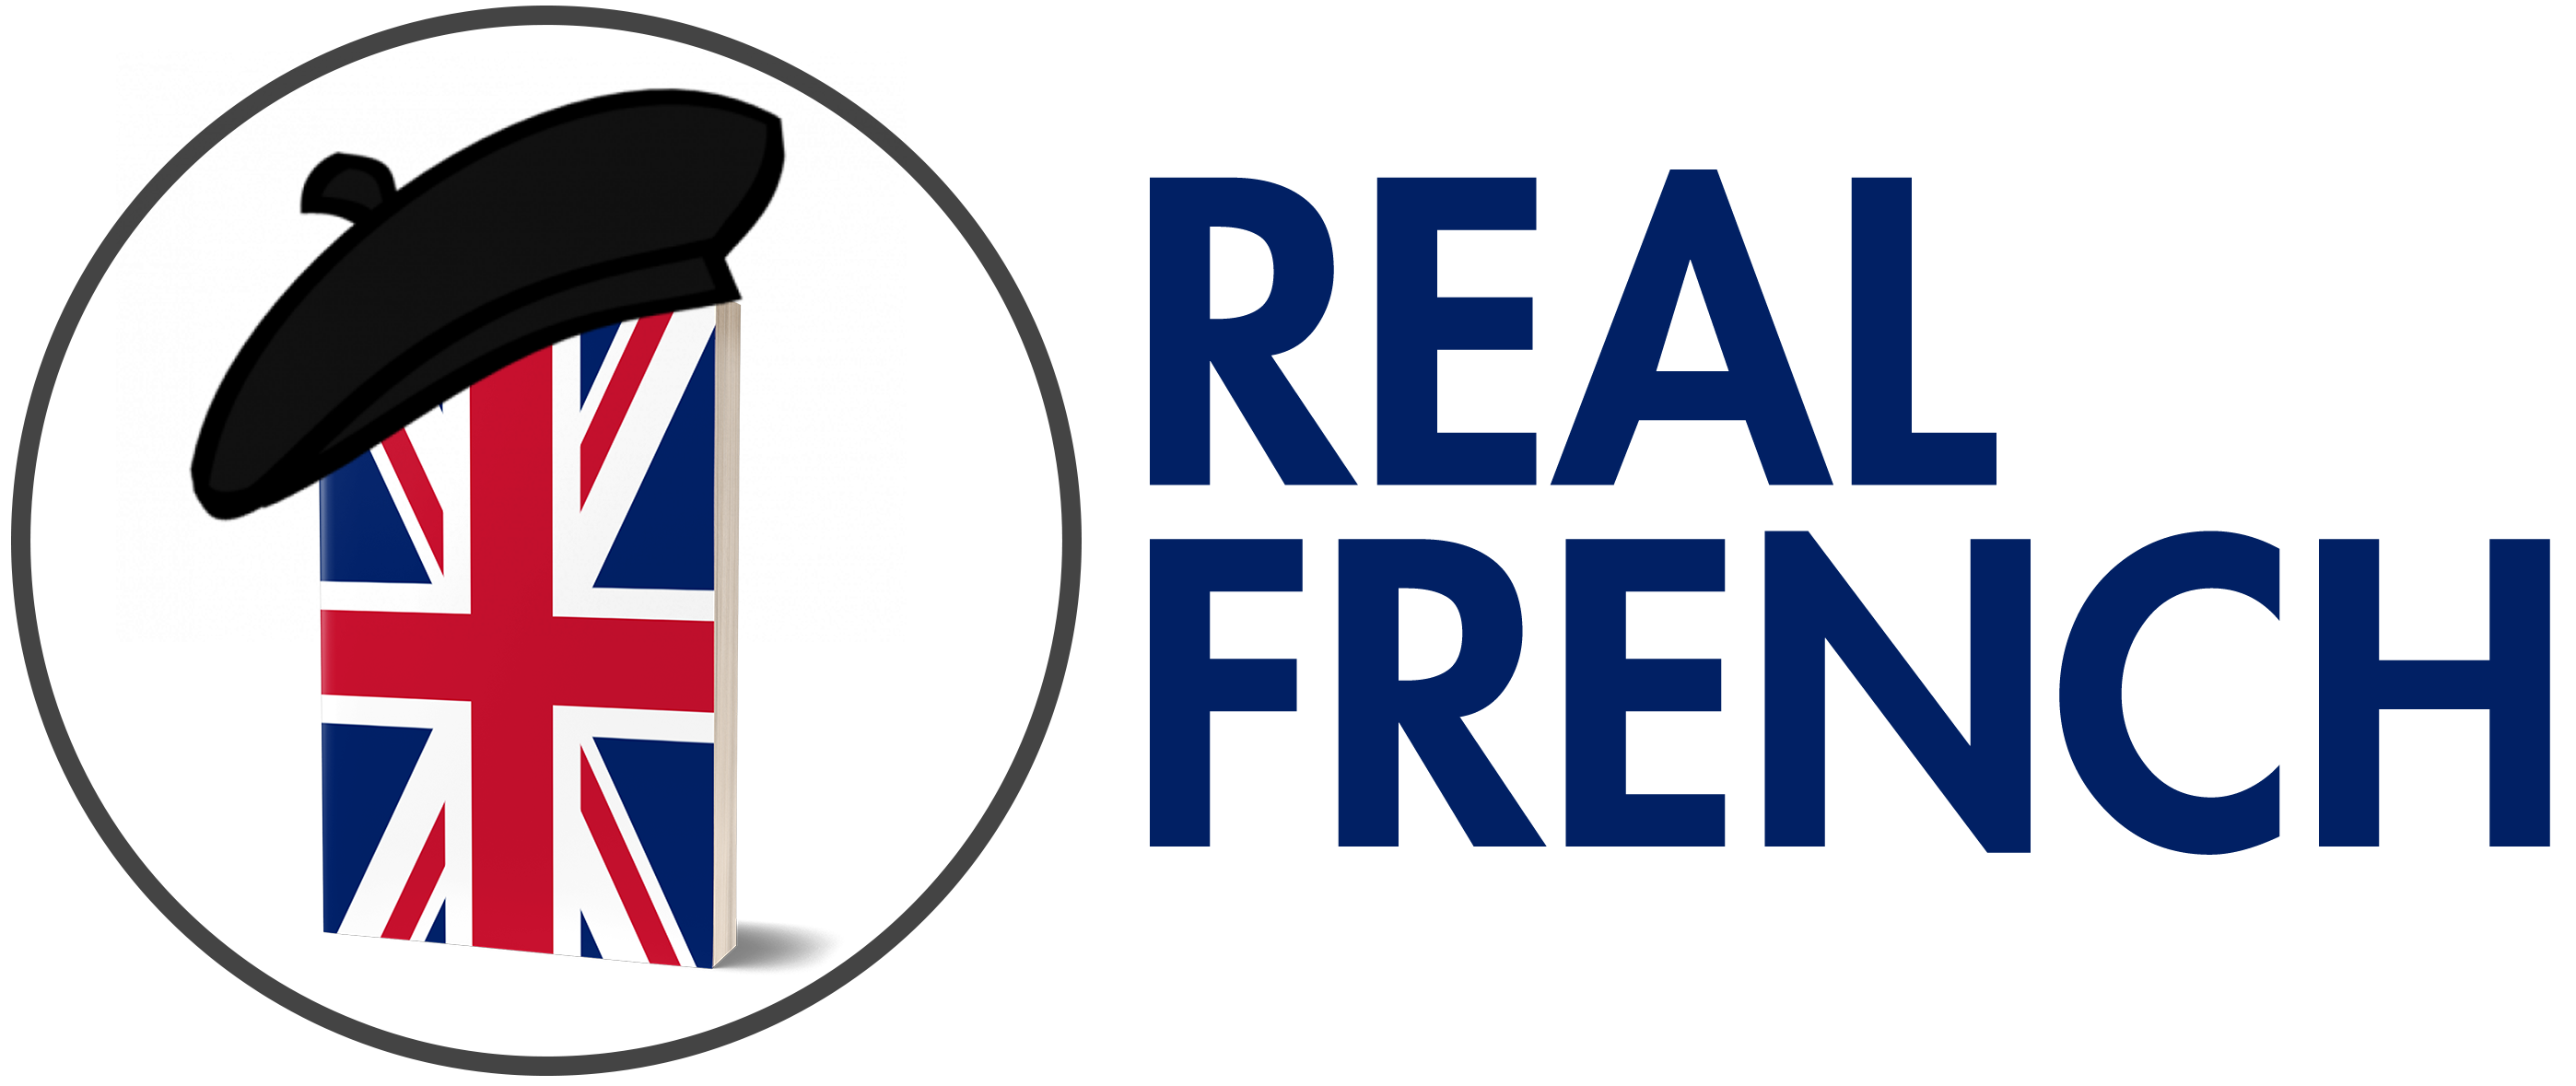 realfrench.net